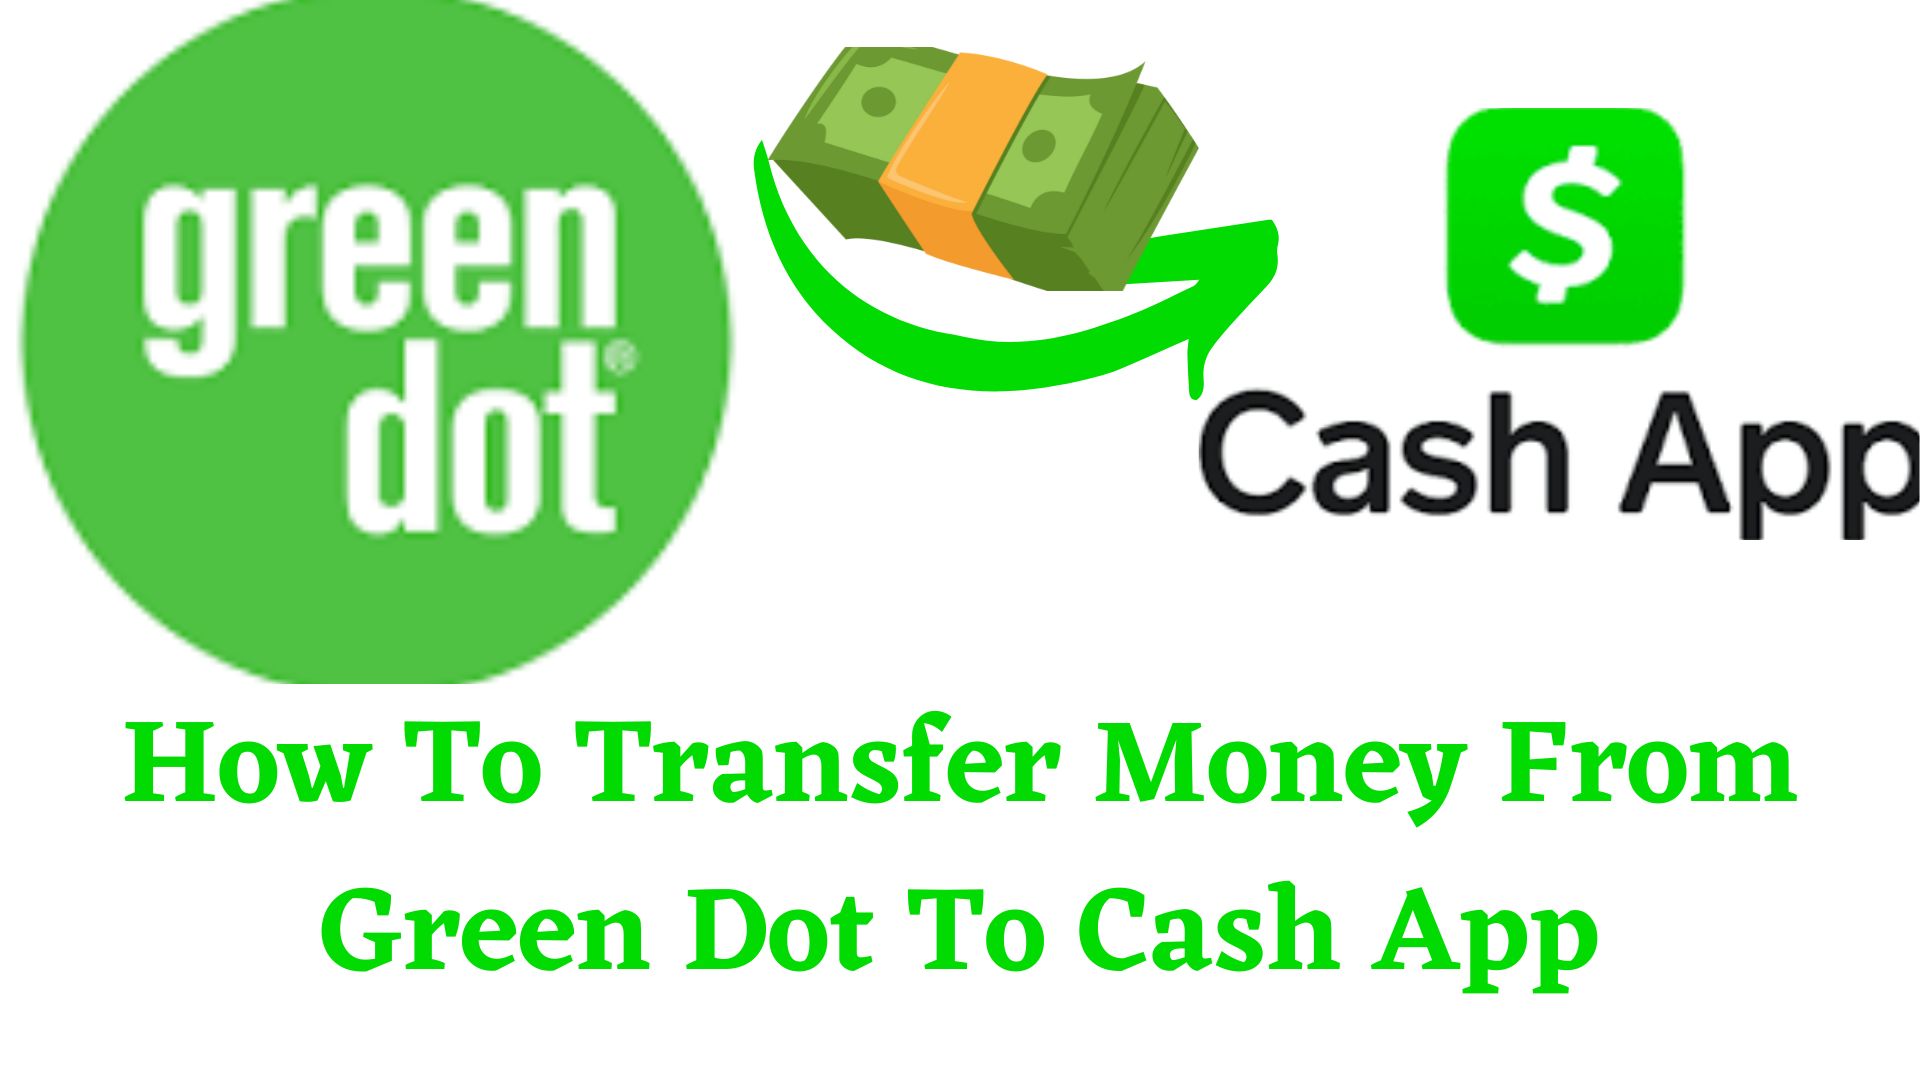 Transfer Money From Green Dot To Cash App